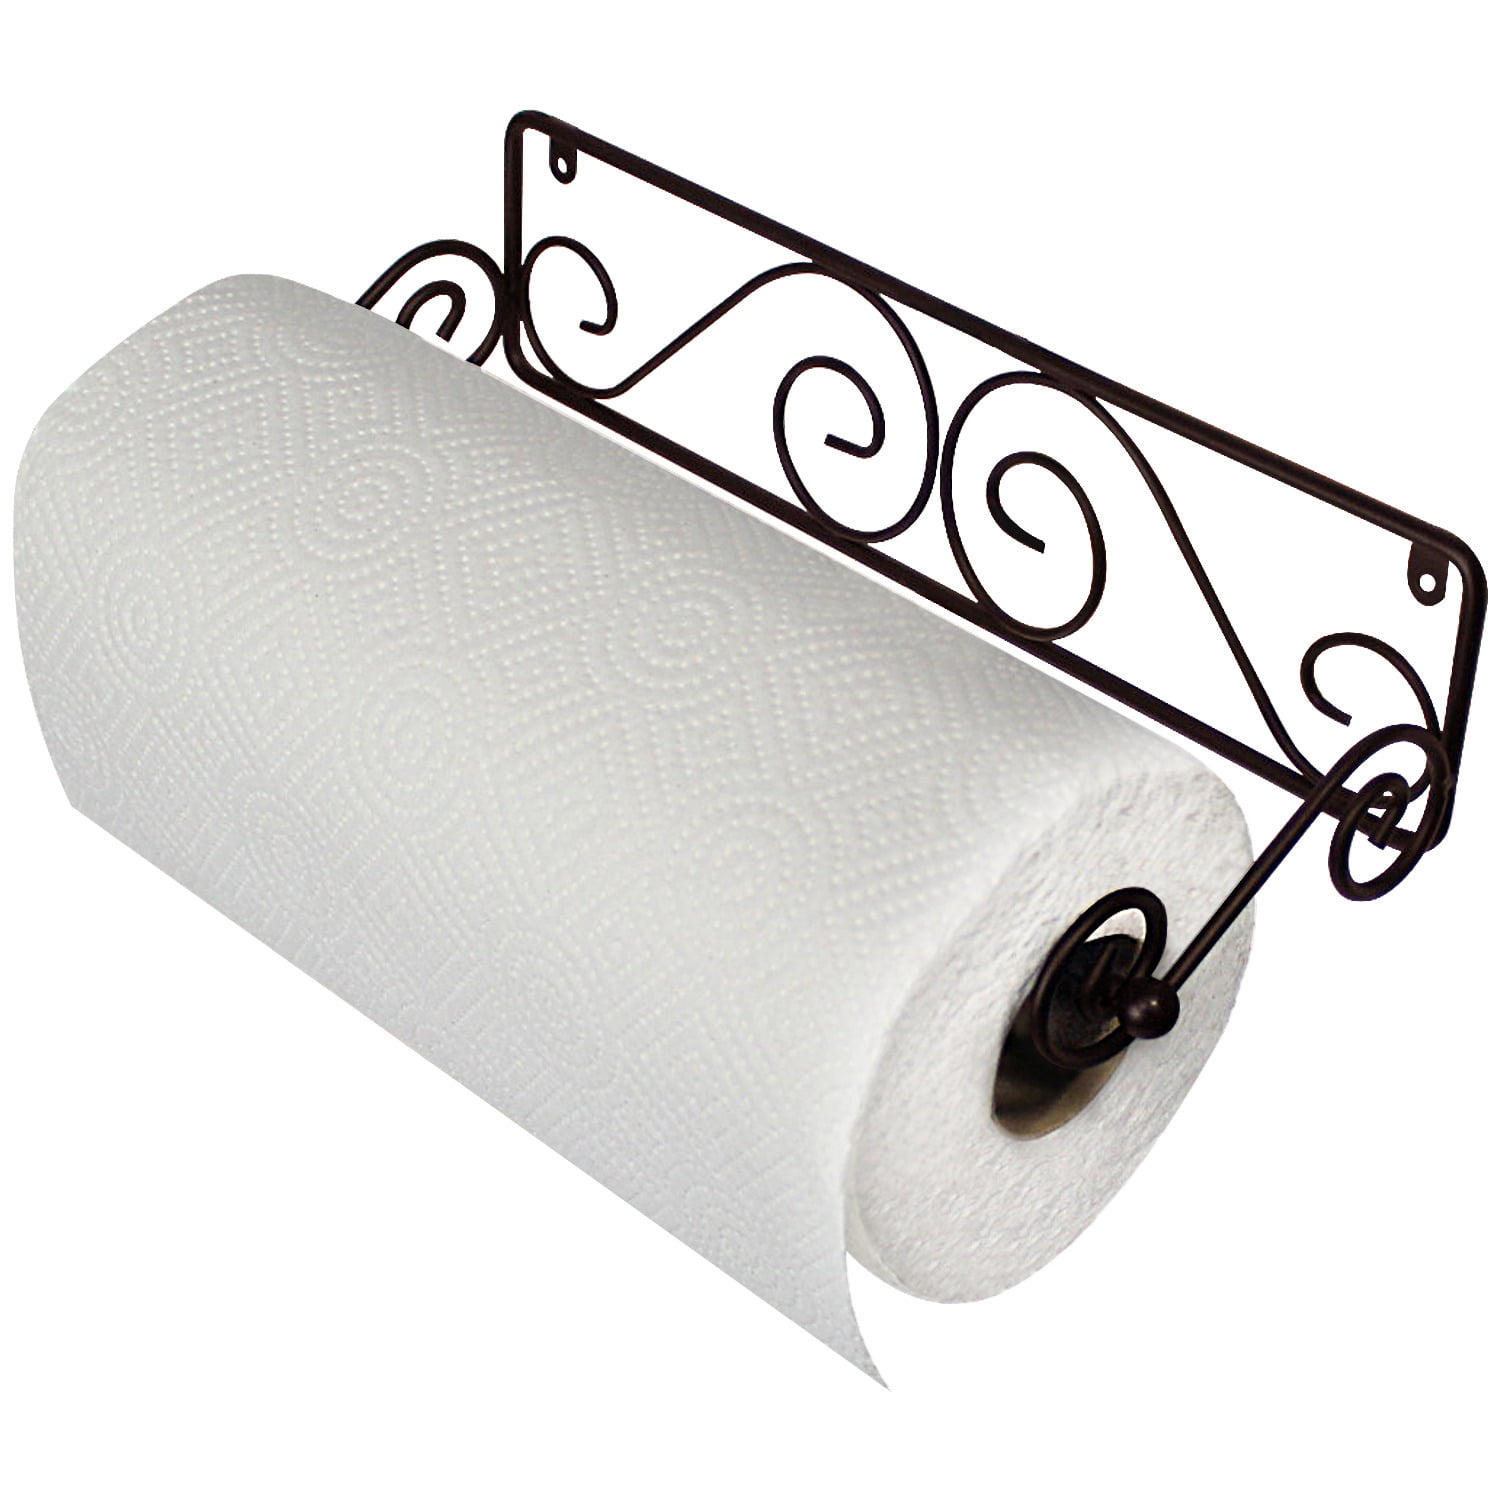 Decorrack Wall Mount Paper Towel Holder, Flexible -BPA Free- Plastic Finish, Cream (2 Pack), White